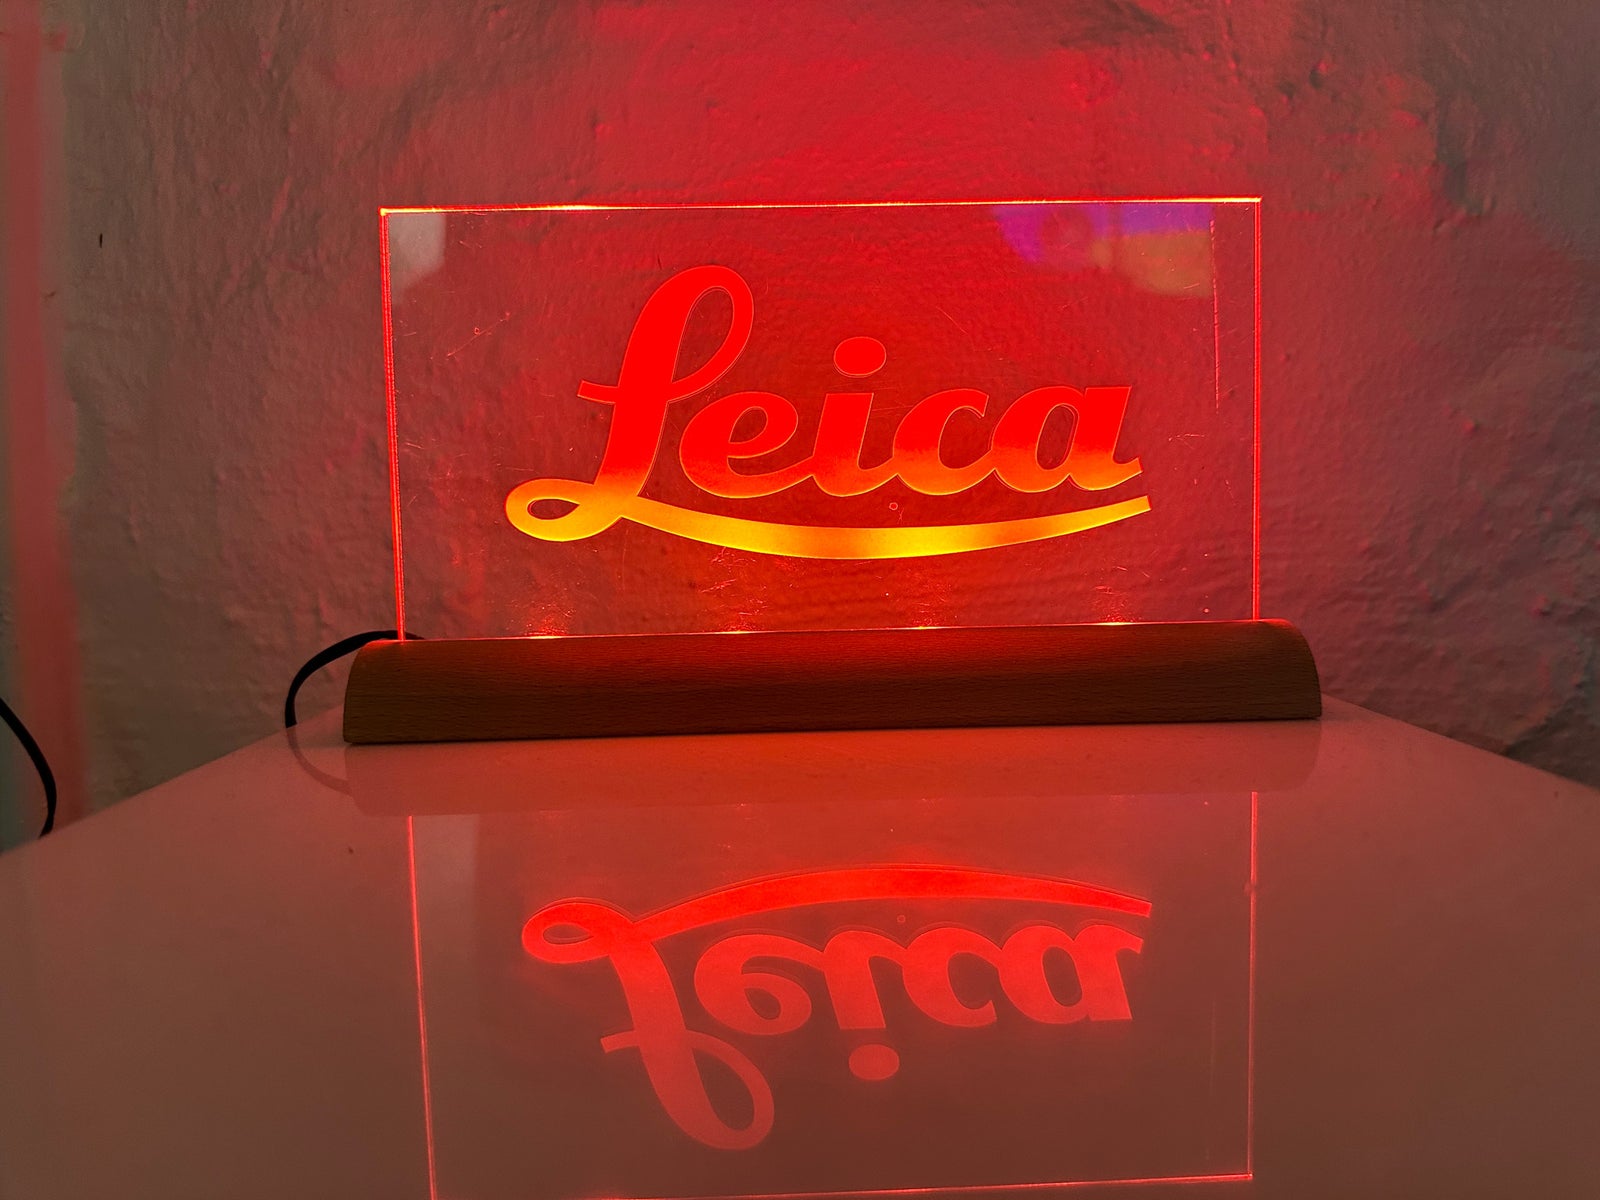 Lampe, Leica, Leica lampe